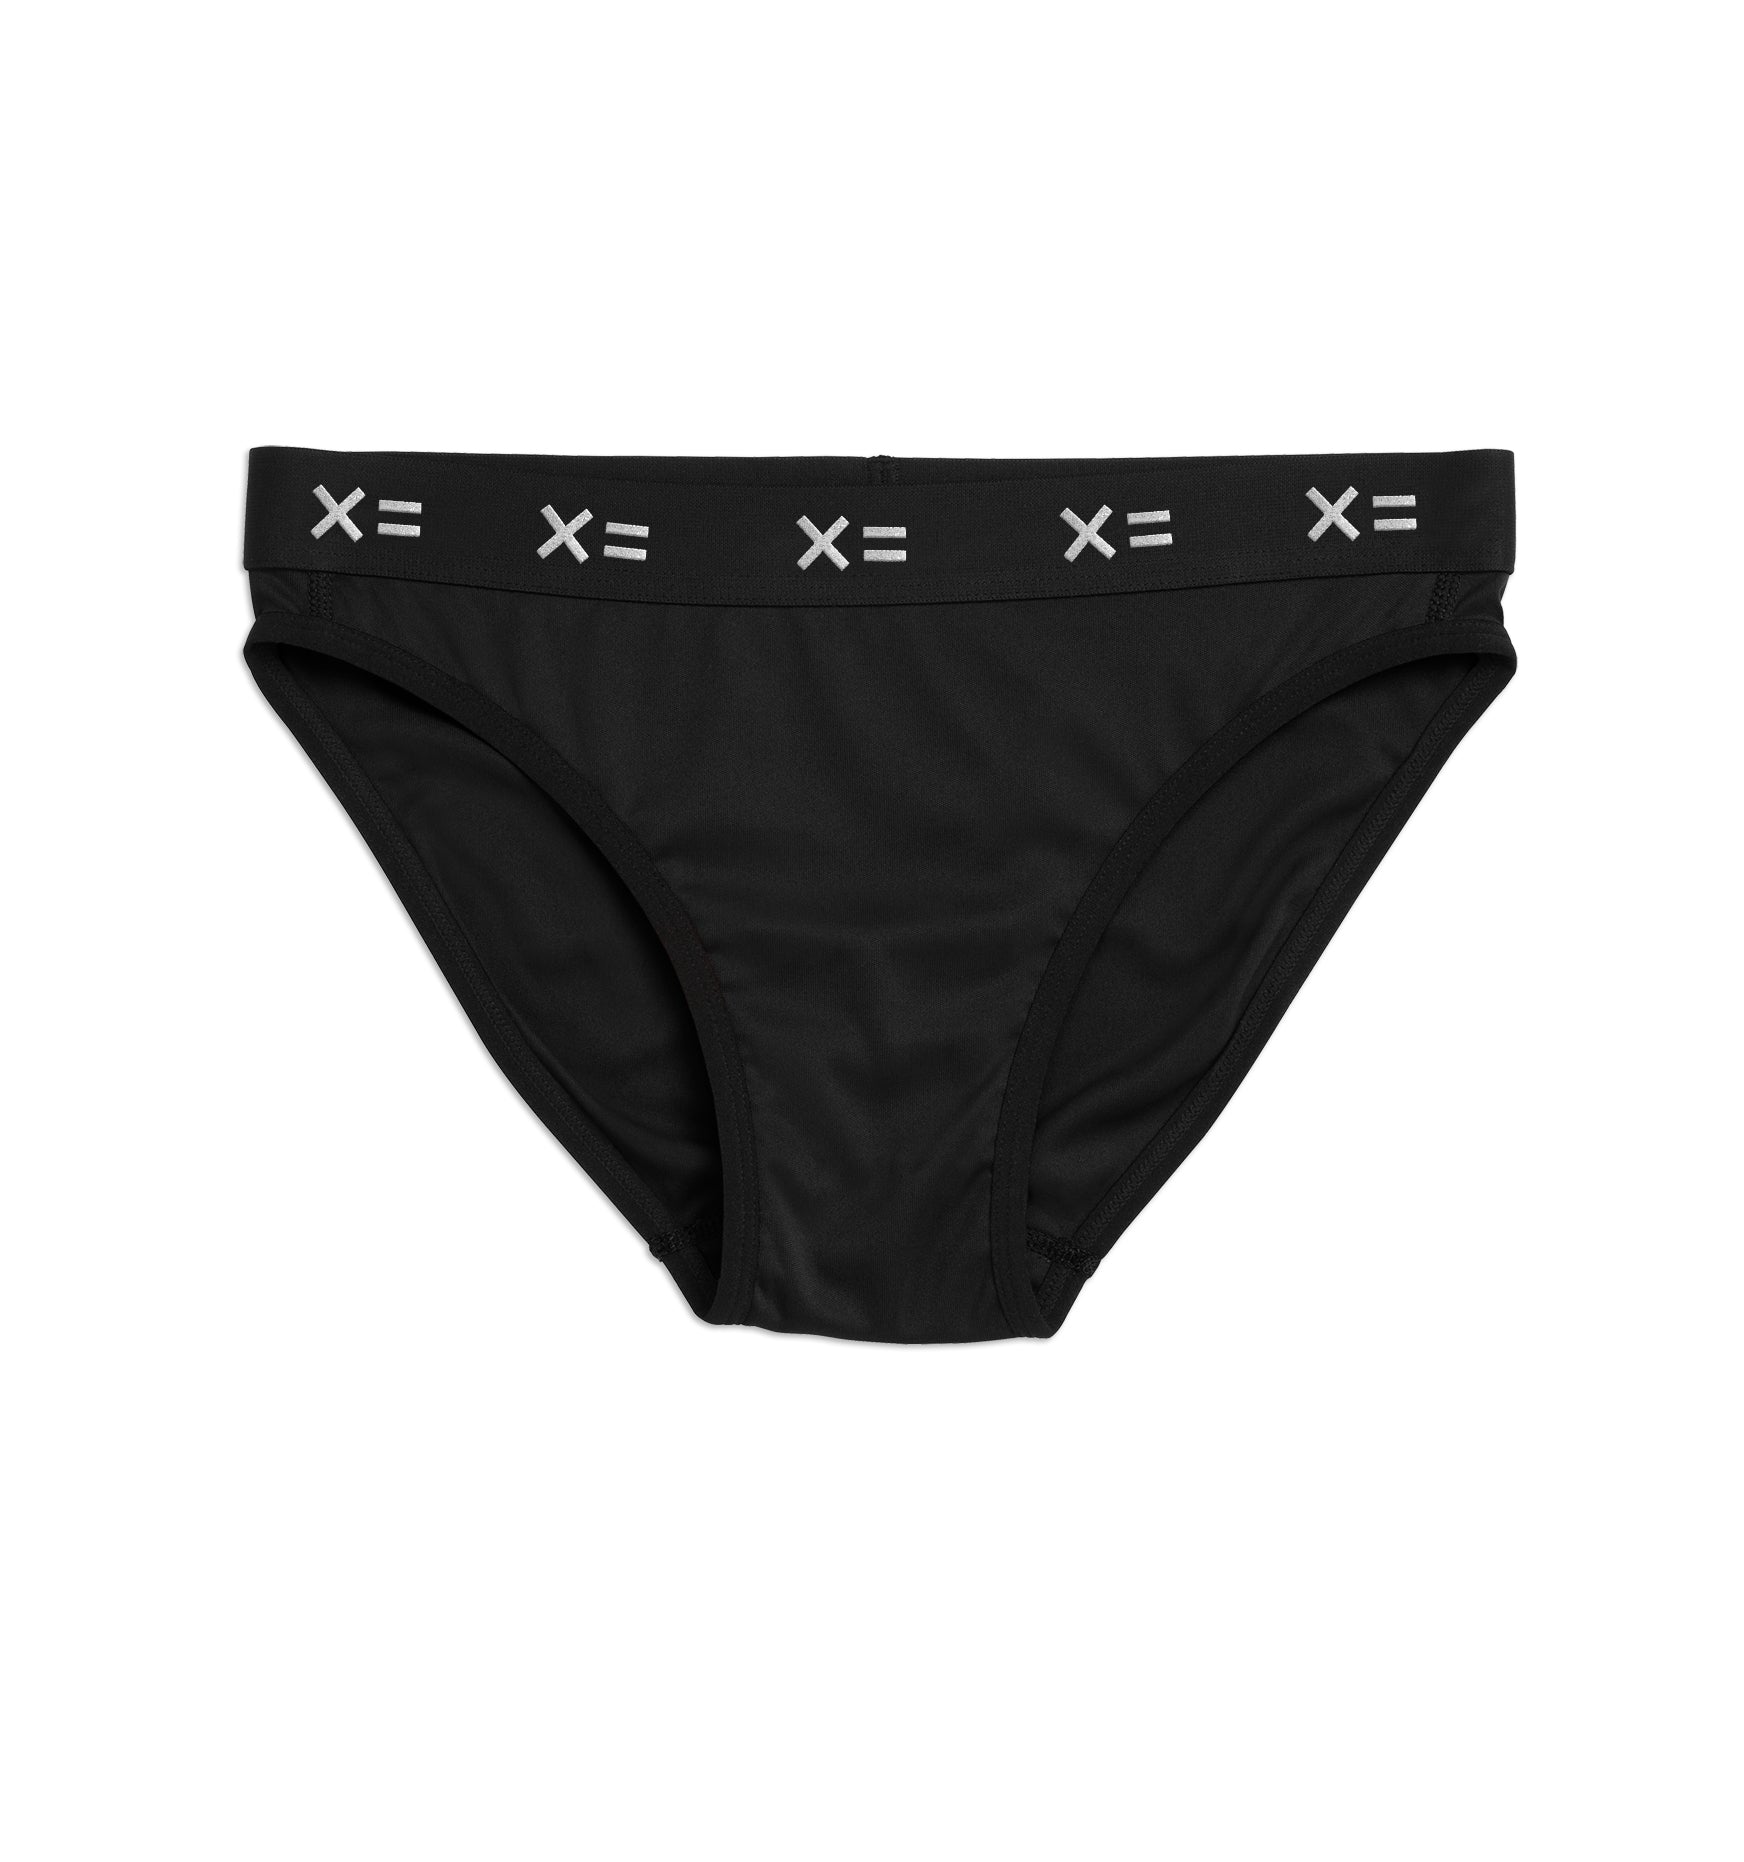 Tucking Bikini - Black X= Shine – TomboyX